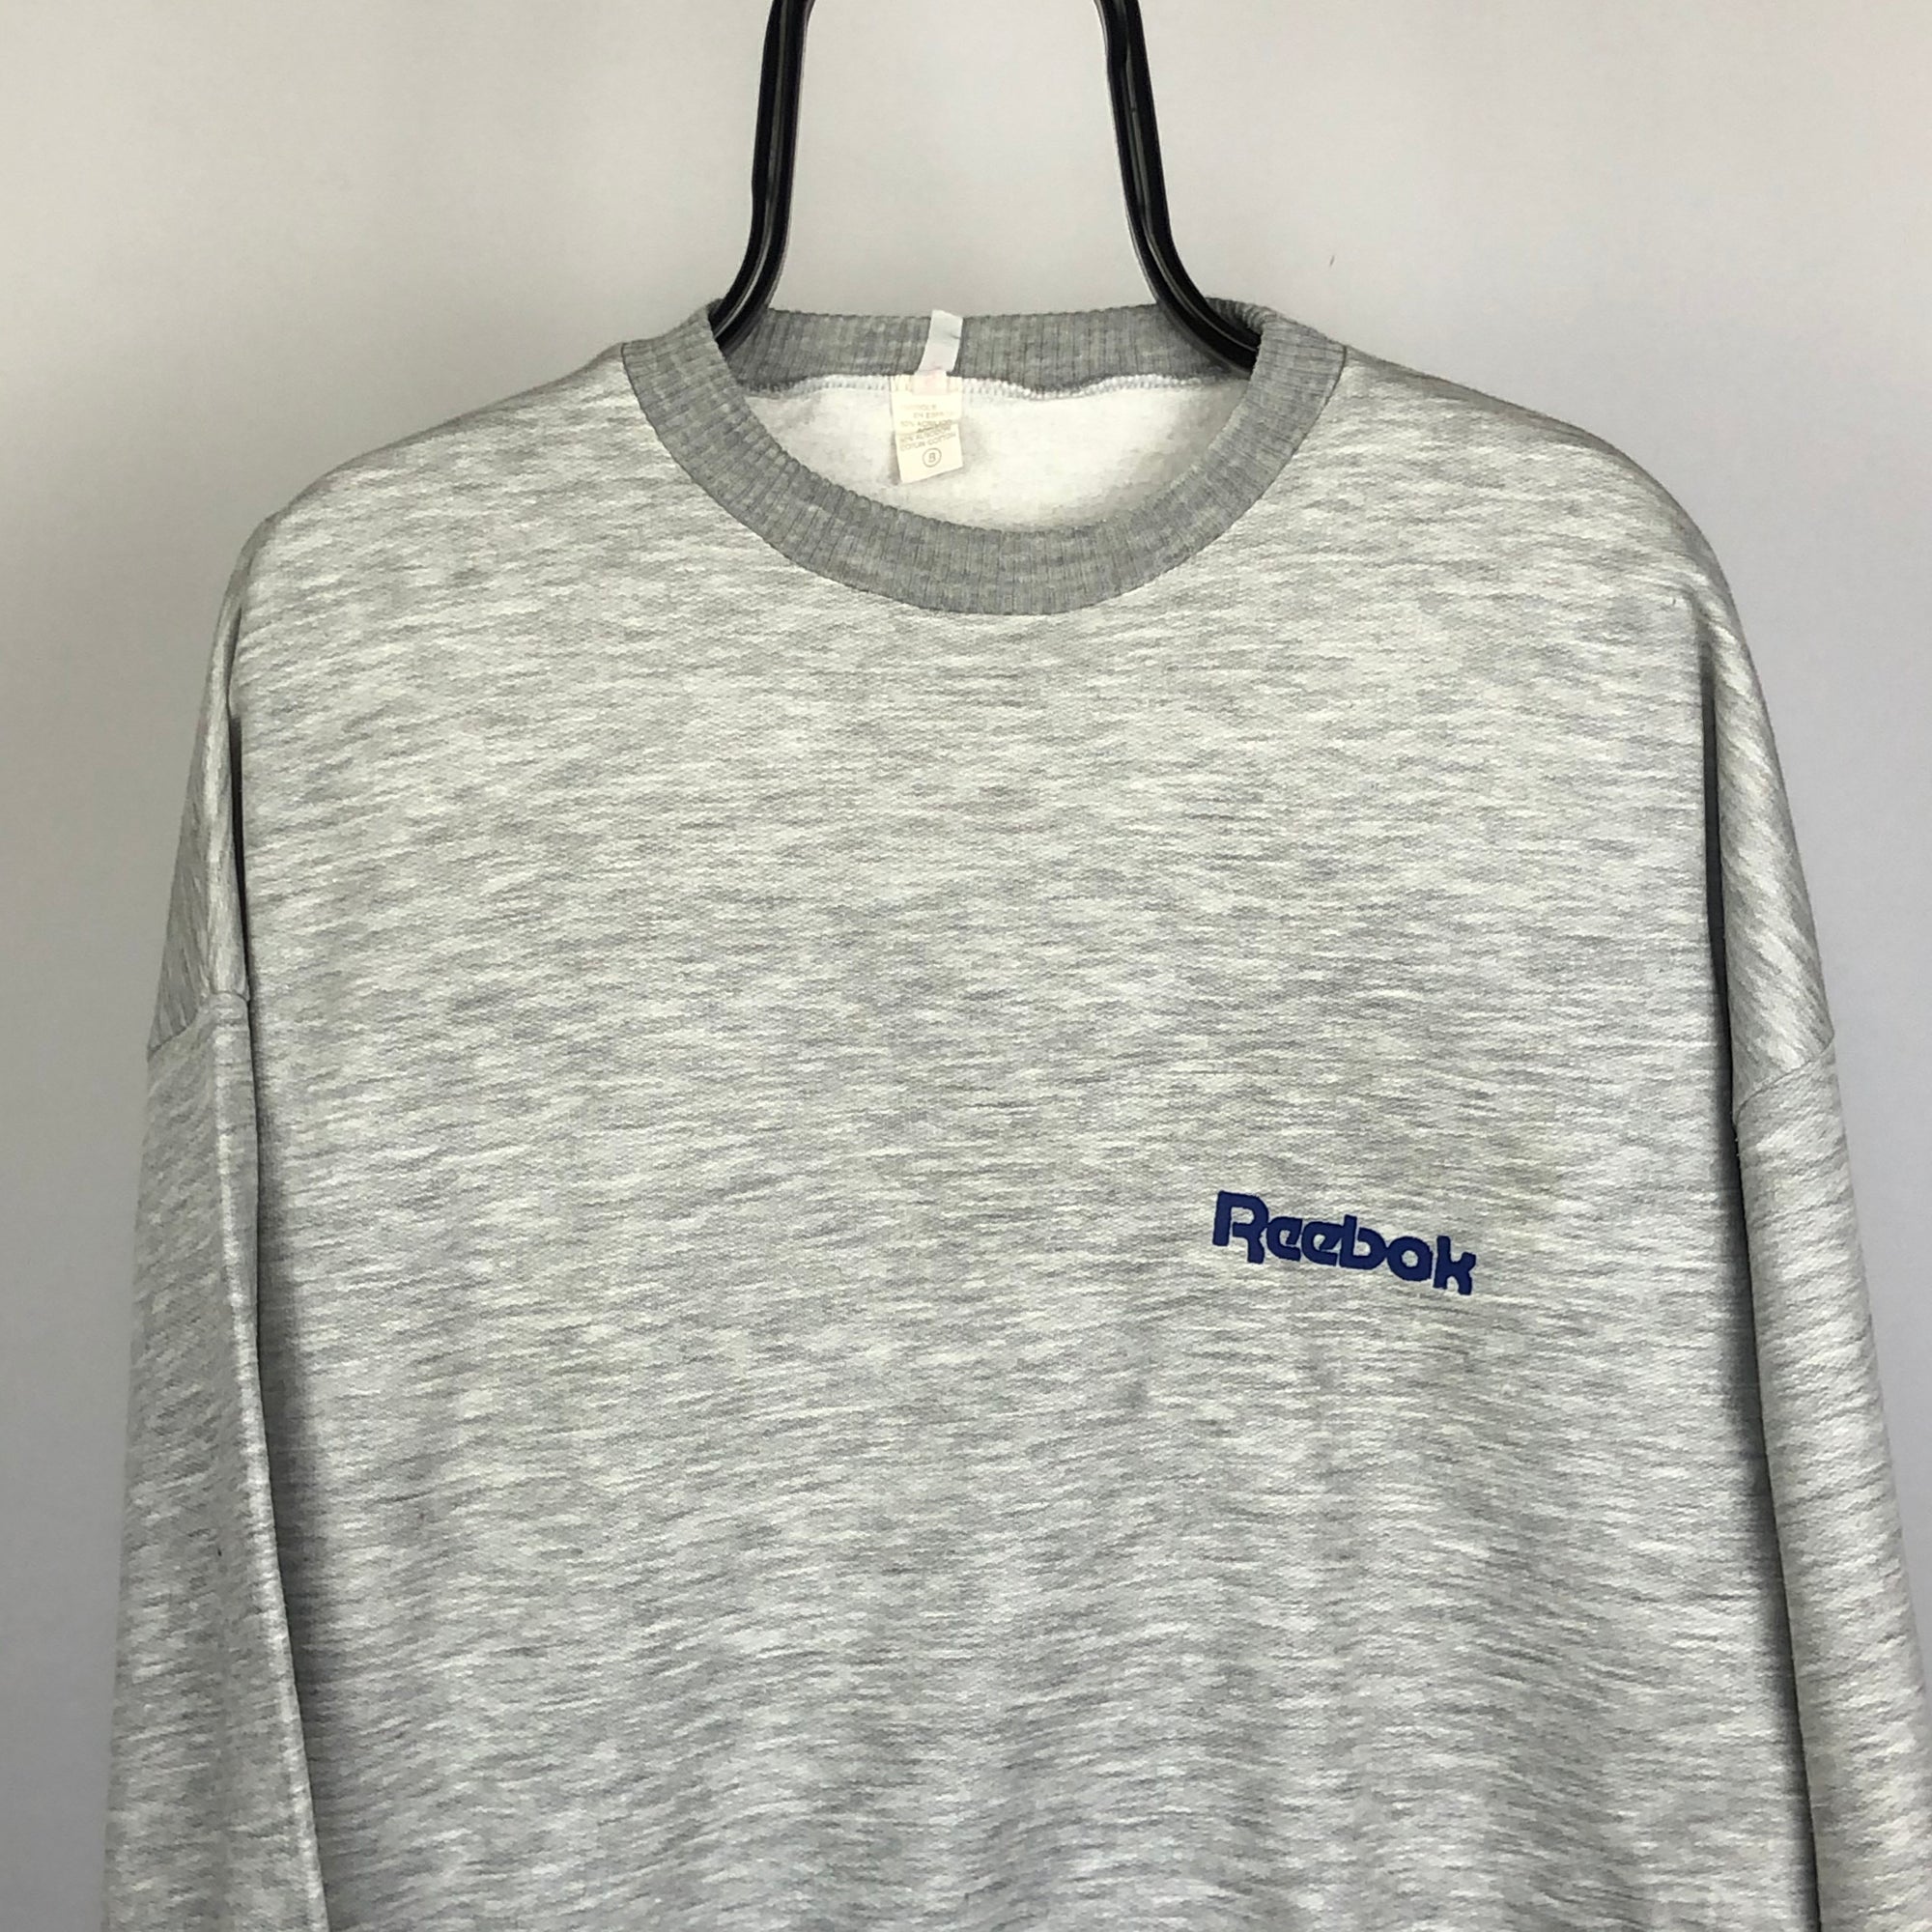 Vintage Reebok Small Spellout Sweatshirt in Grey - Men's Medium/Women's Large